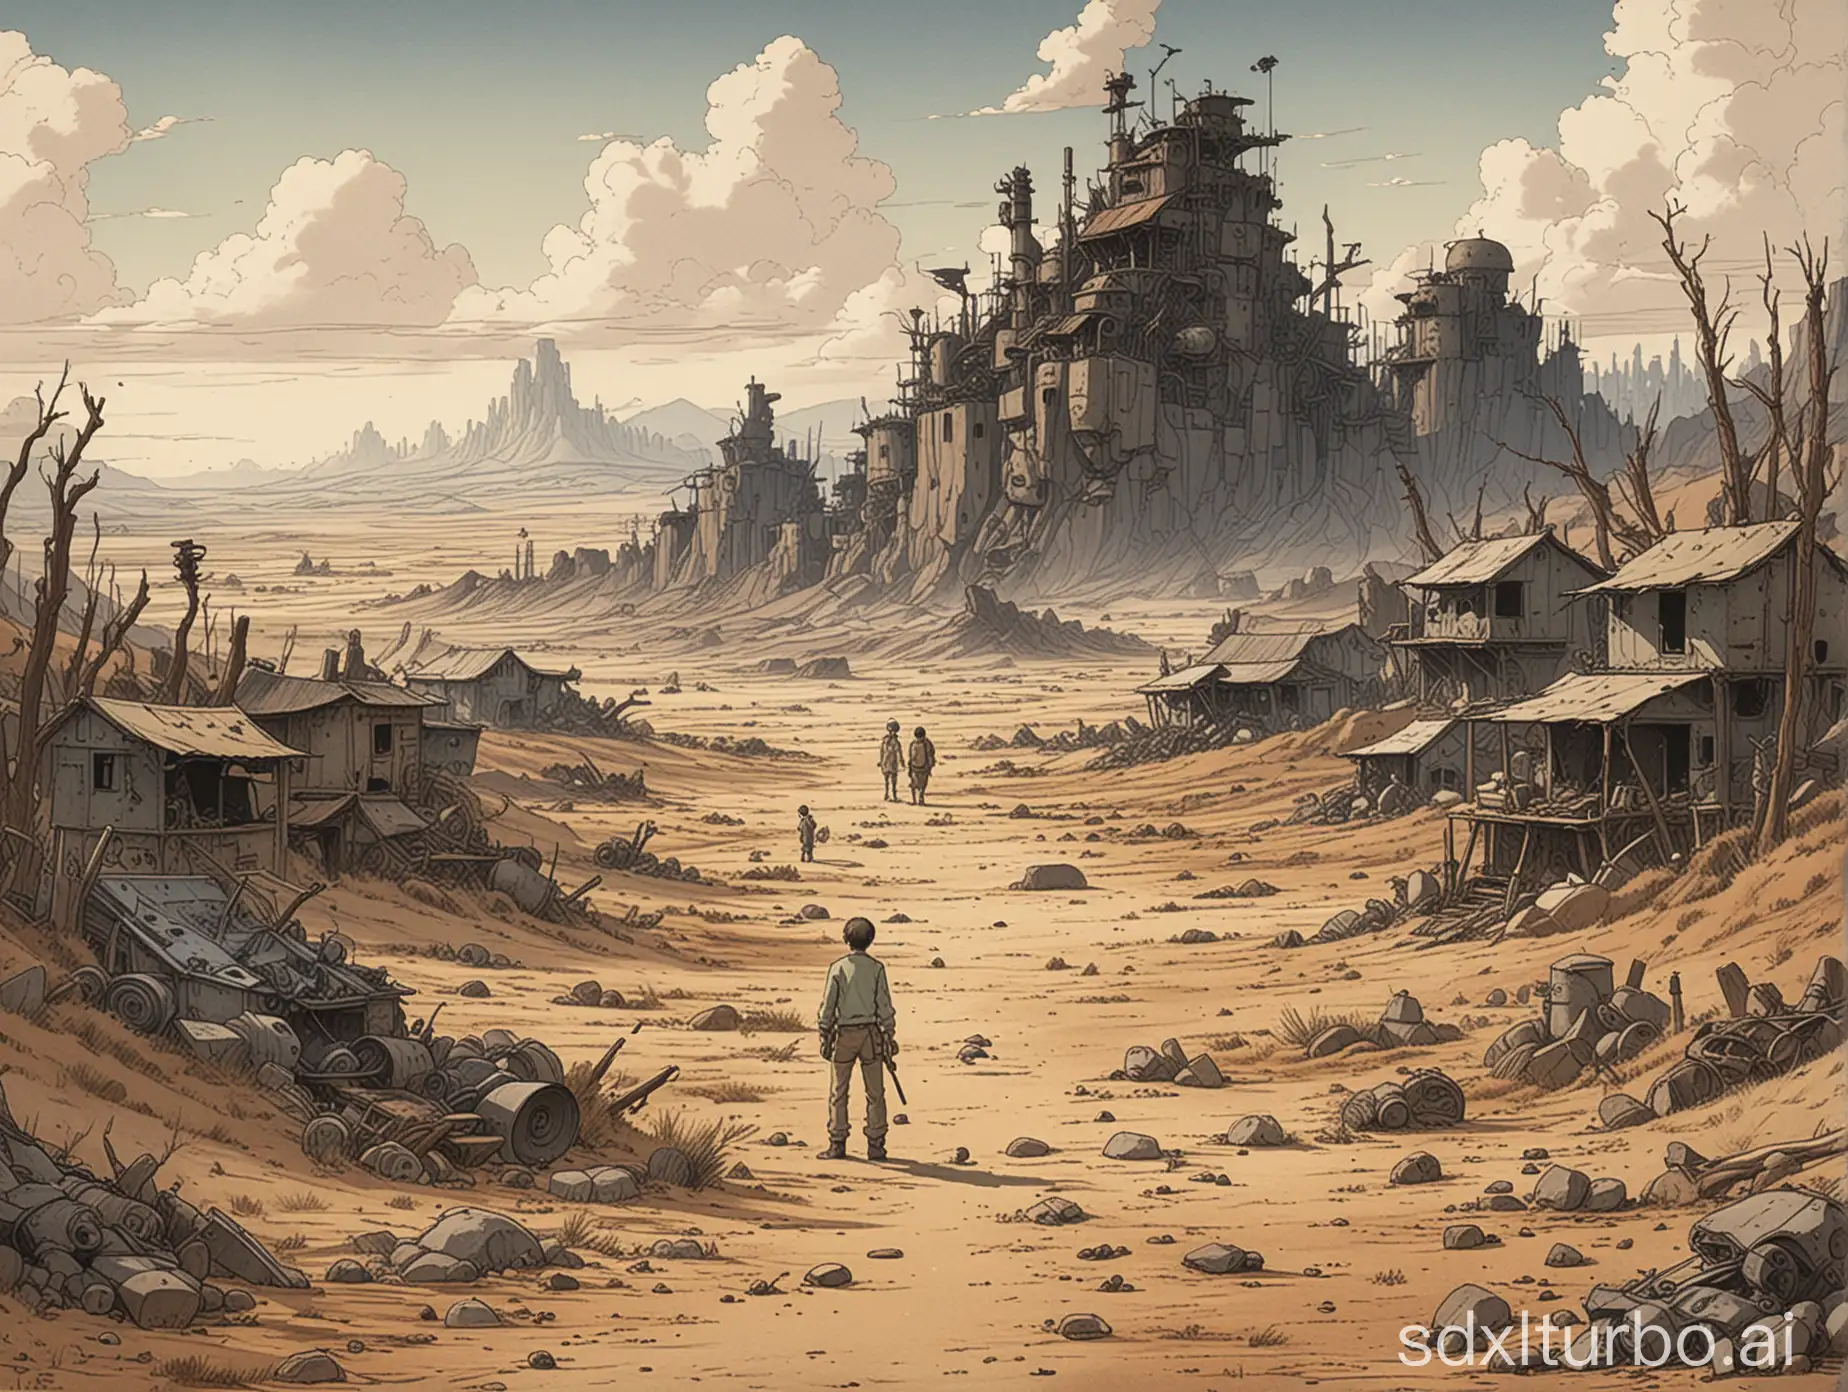 $$$ Scene of a wasteland hand-drawn by Hayao Miyazaki $$$